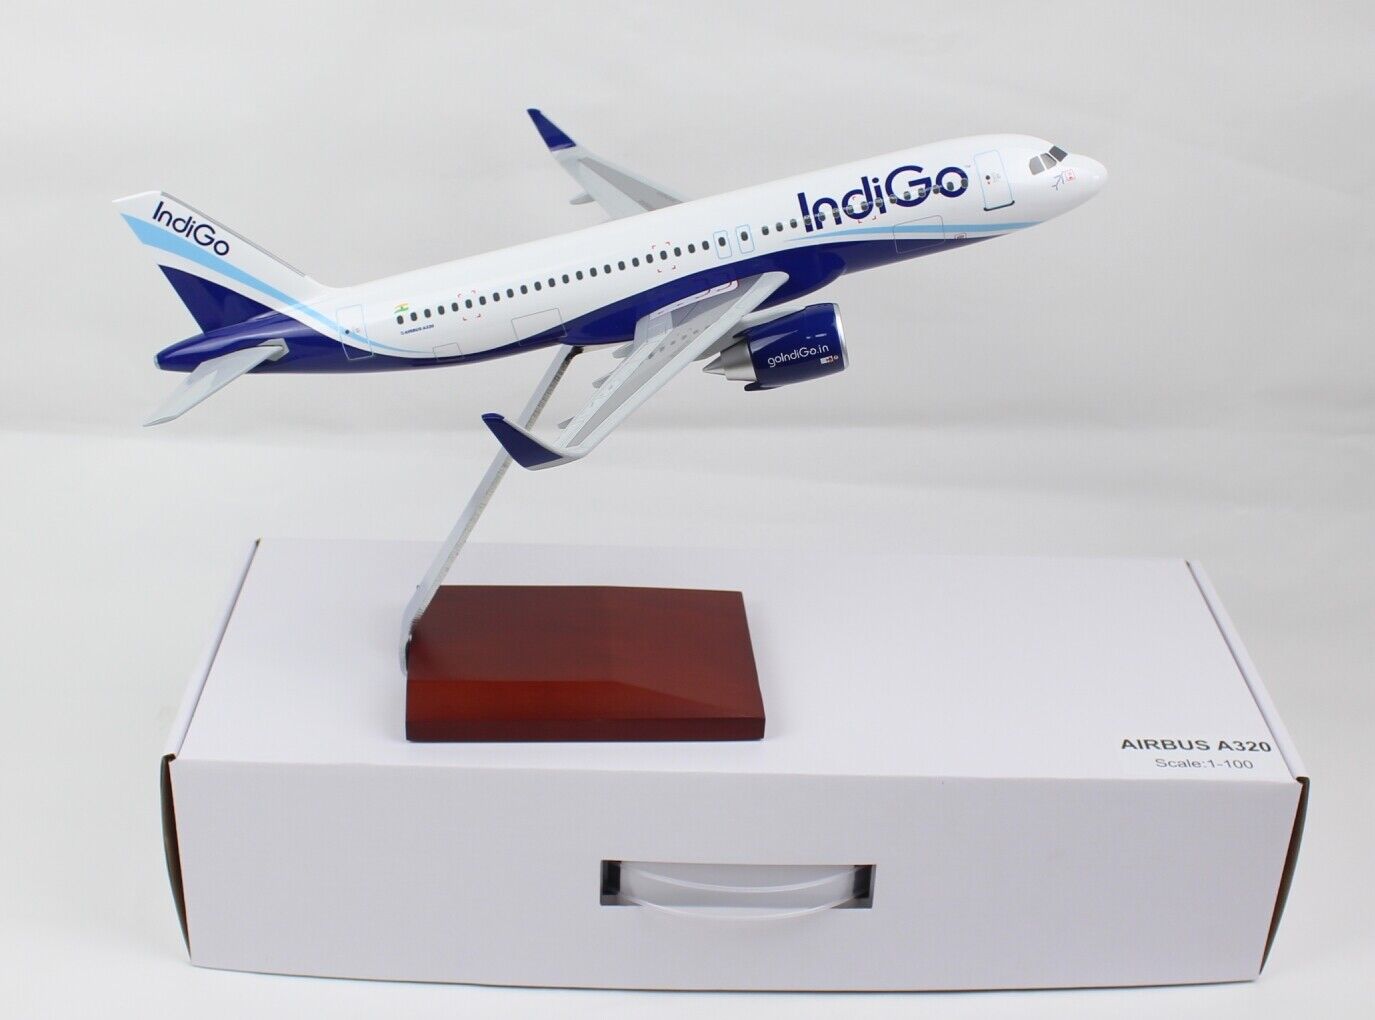 1/100 Scale Indigo A320 Static Aircraft Passenger Plane Display Model Toy